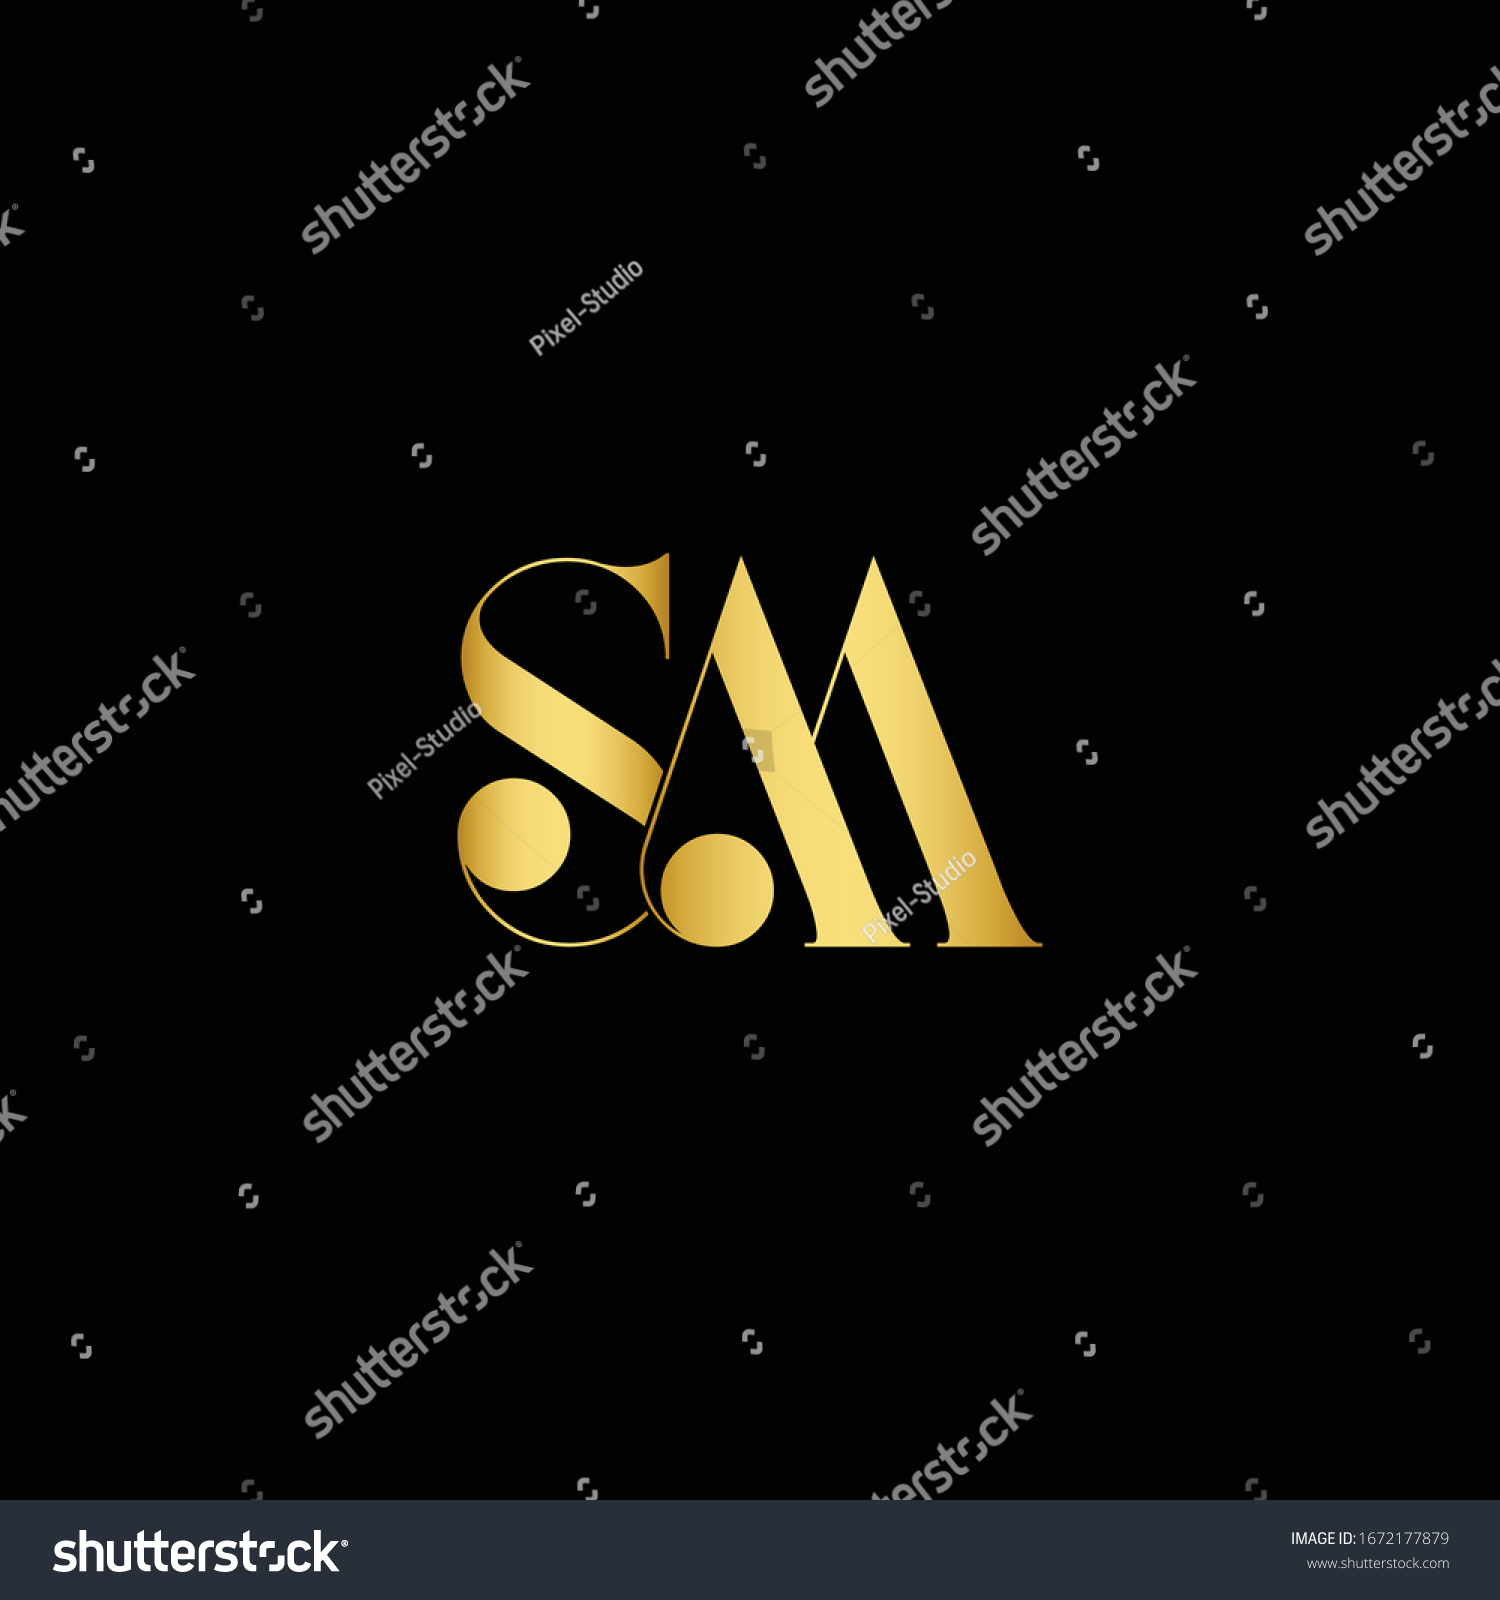 393 Sm real estate logo Images, Stock Photos & Vectors | Shutterstock